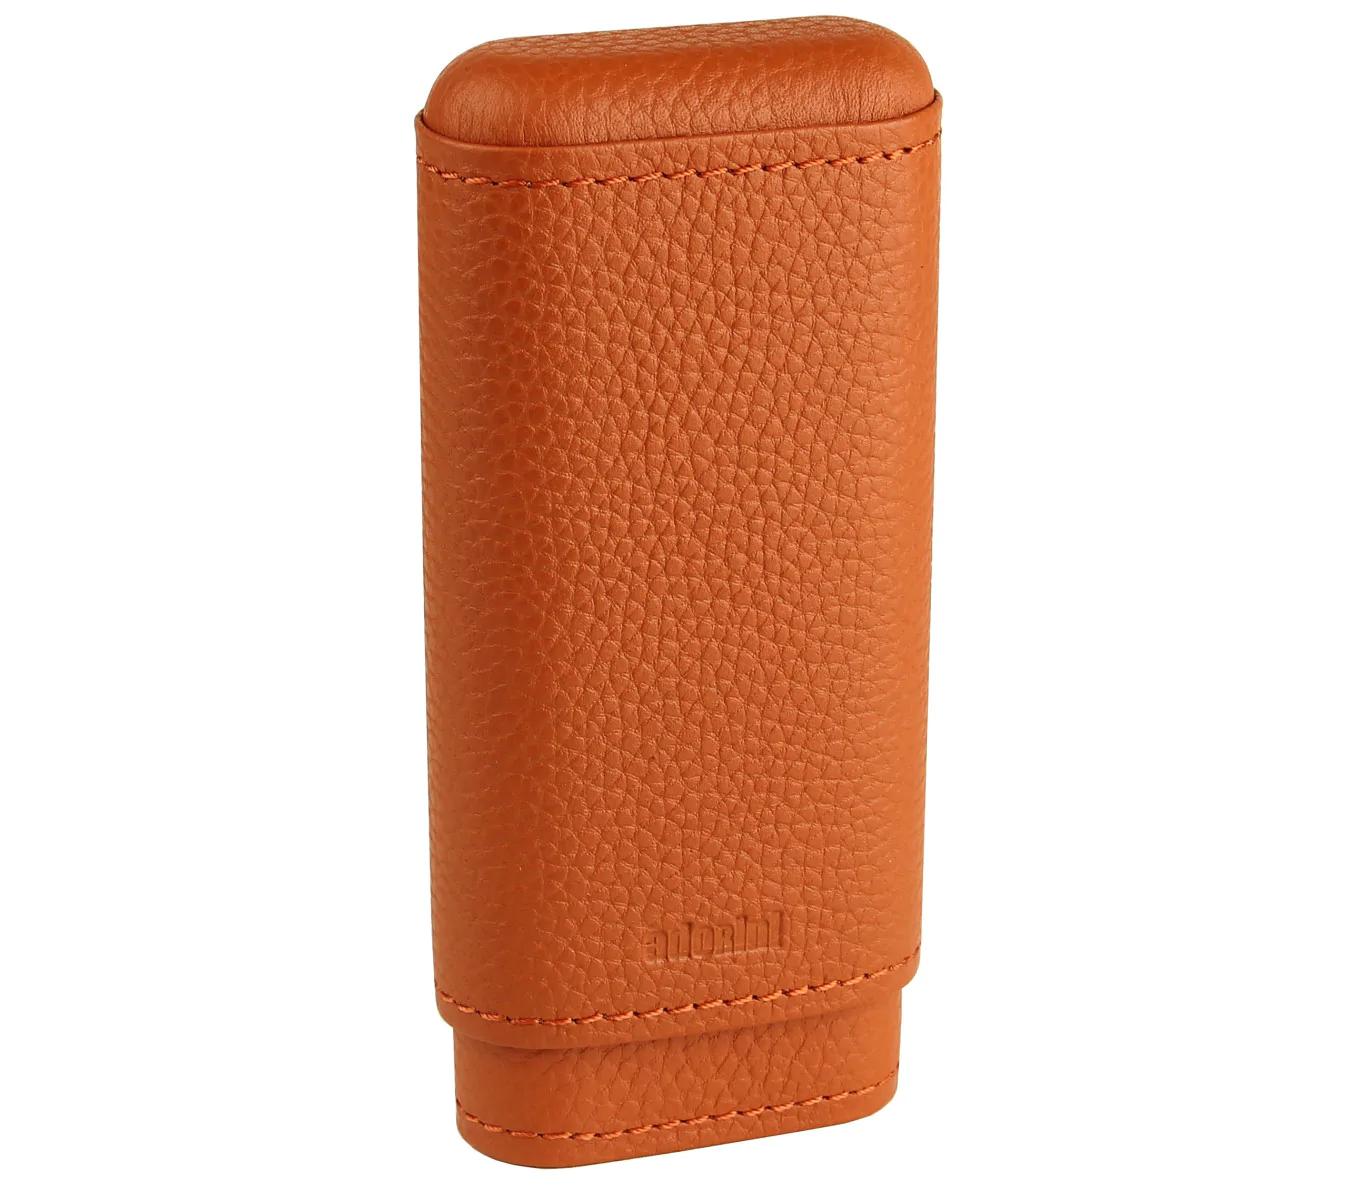 adorini Cigar Case Real Leather 2-3 Cigars Crocus Orange